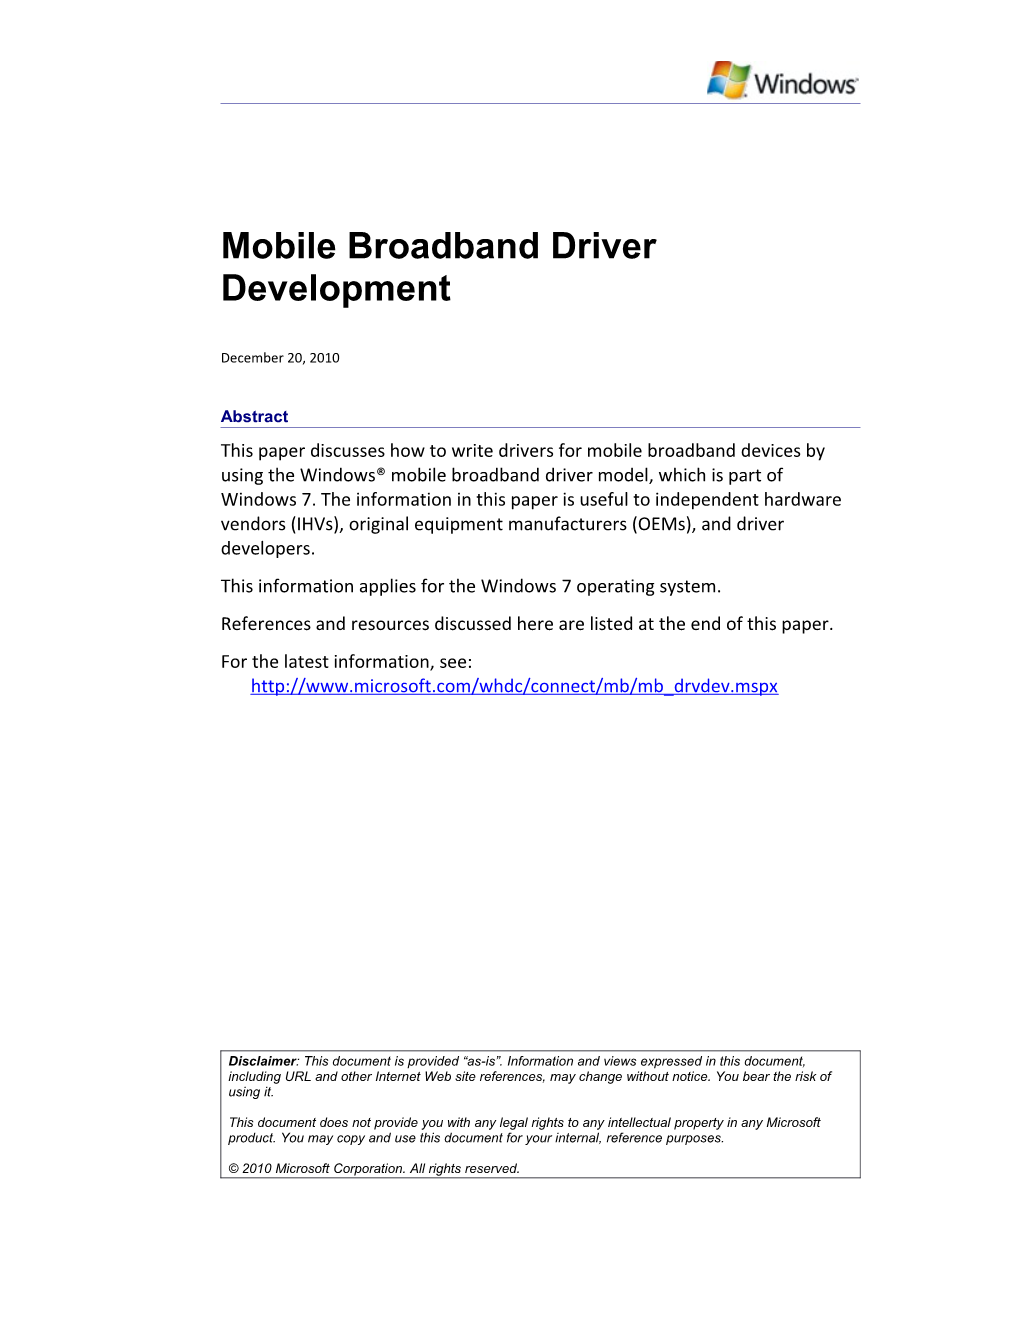 Mobile Broadband Driver Development - 1